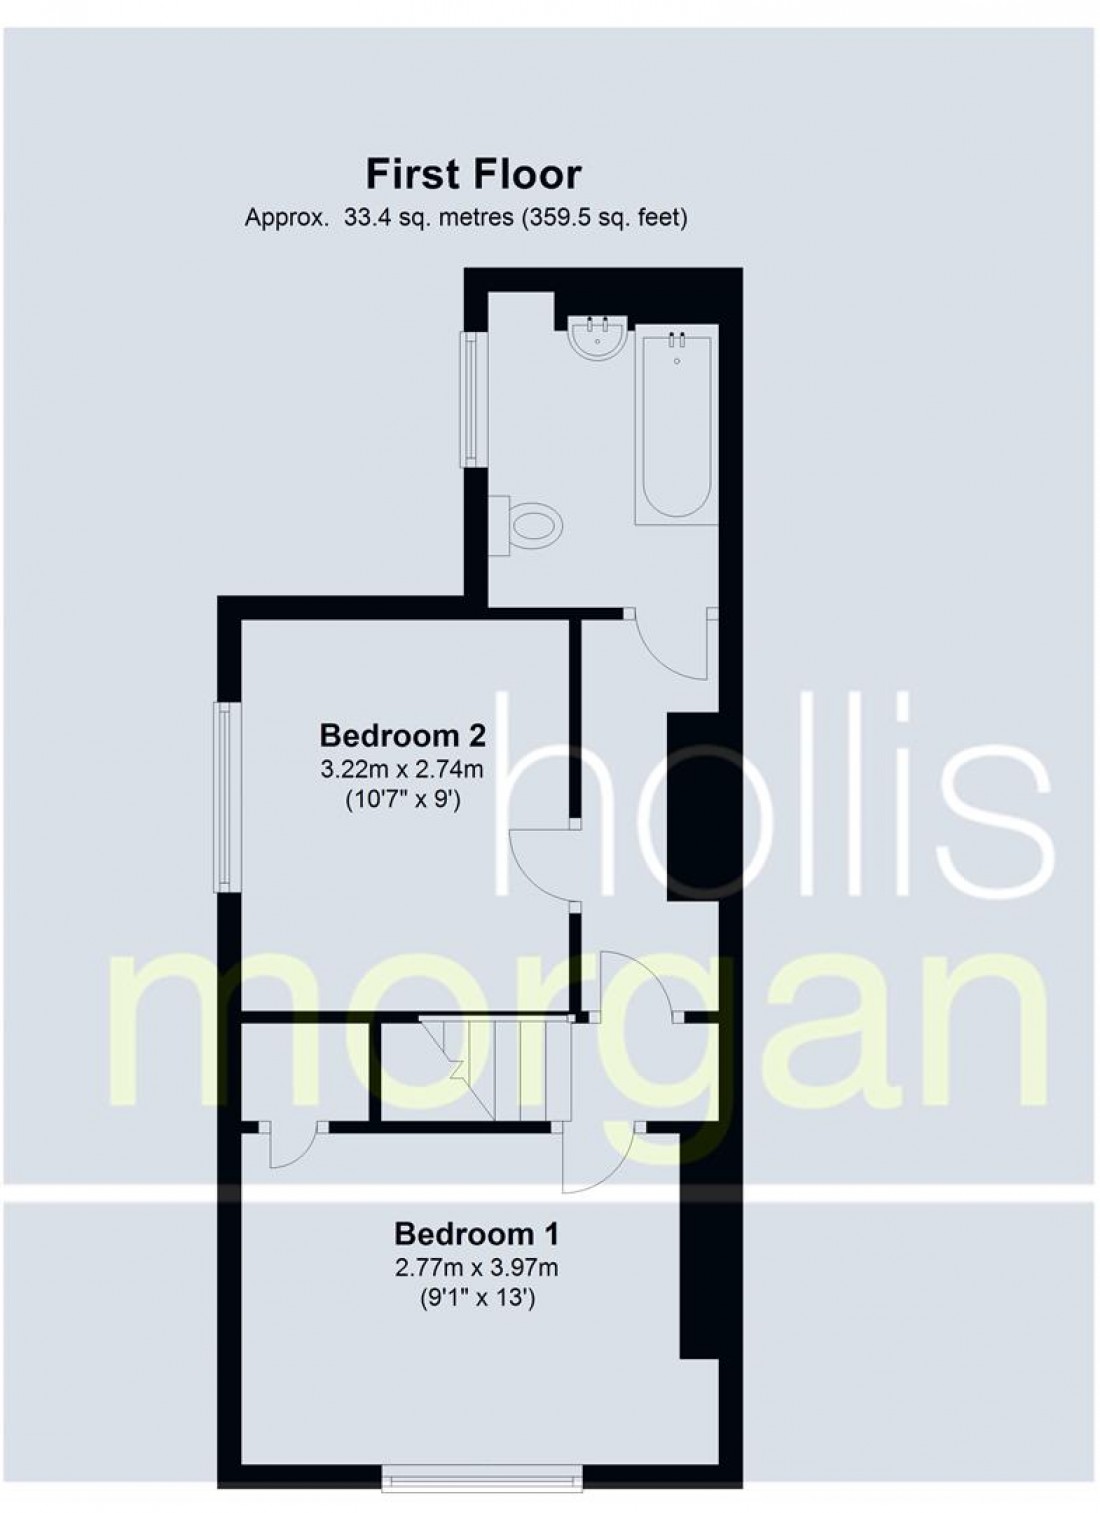 Floorplan for 138 Bell Hill Road, St George, Bristol